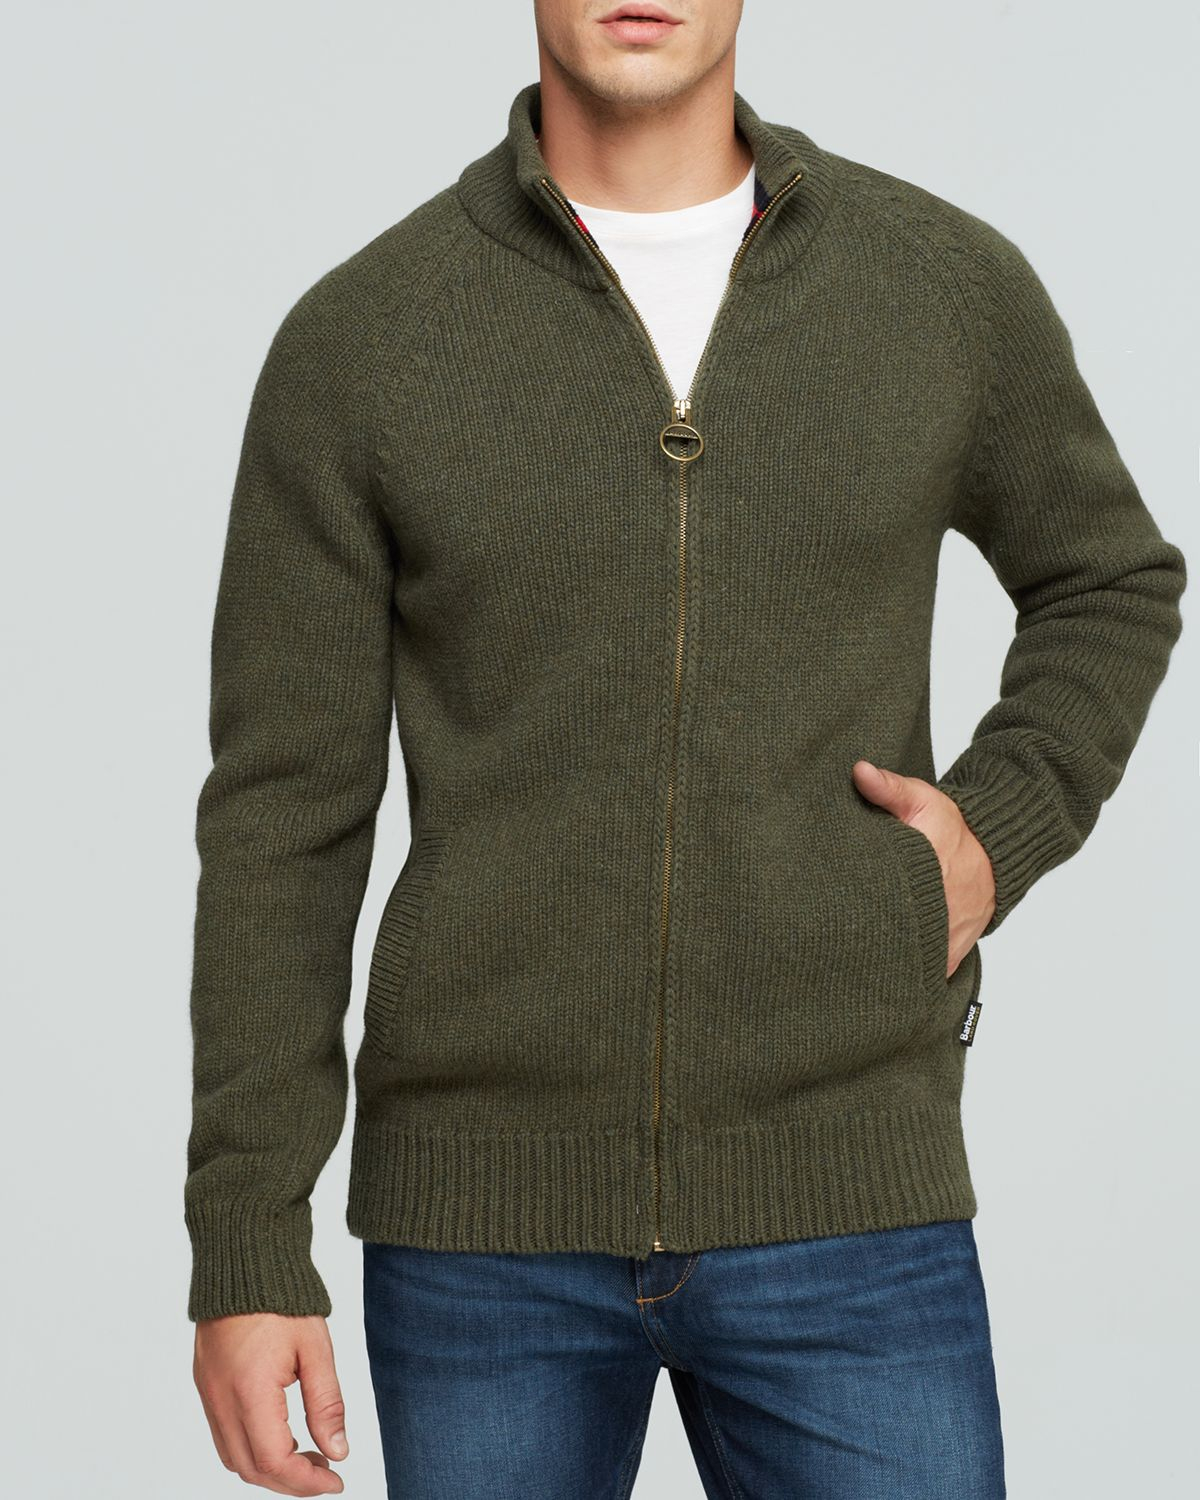 Barbour Rescue Zip Sweater in Dark Olive (Green) for Men - Lyst